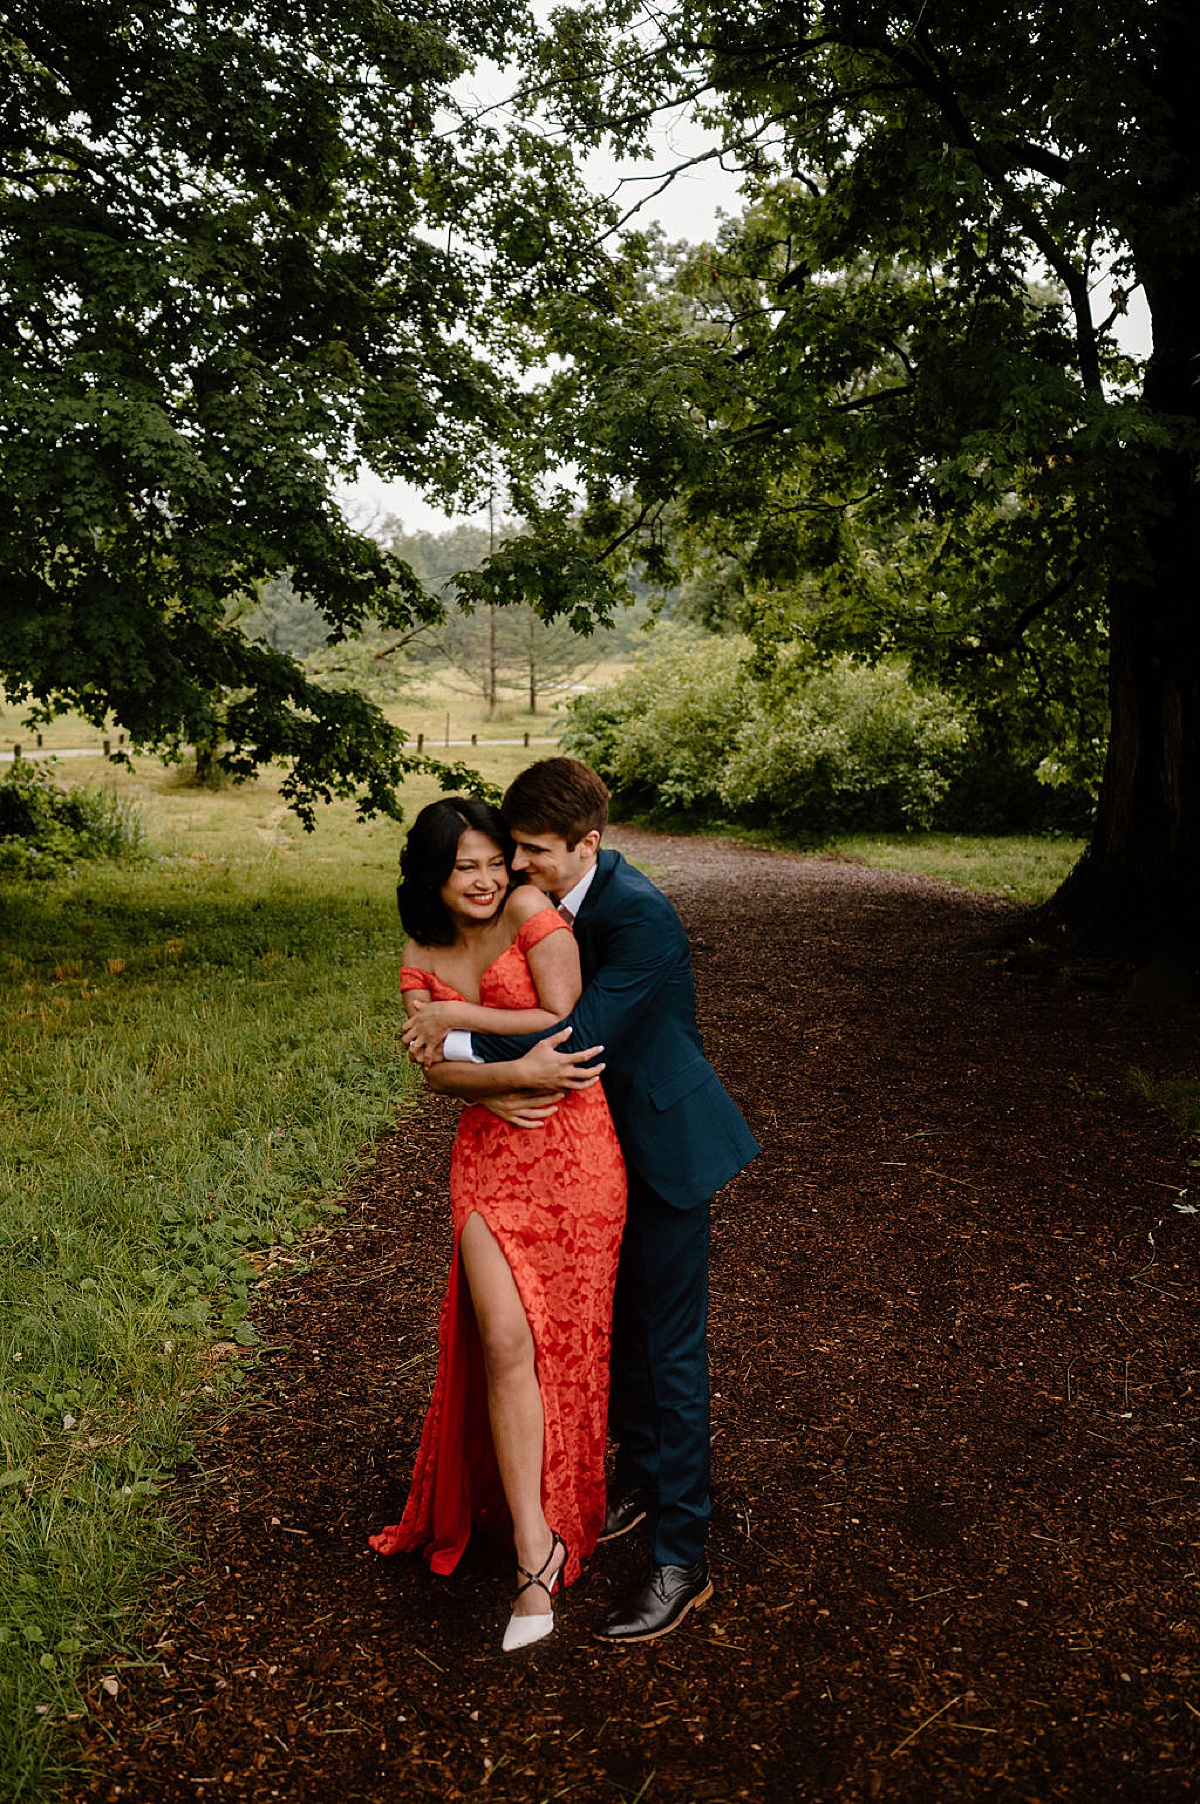 man and woman embrace wearing elegant evening dress in outdoor mortem arboretum engagement session